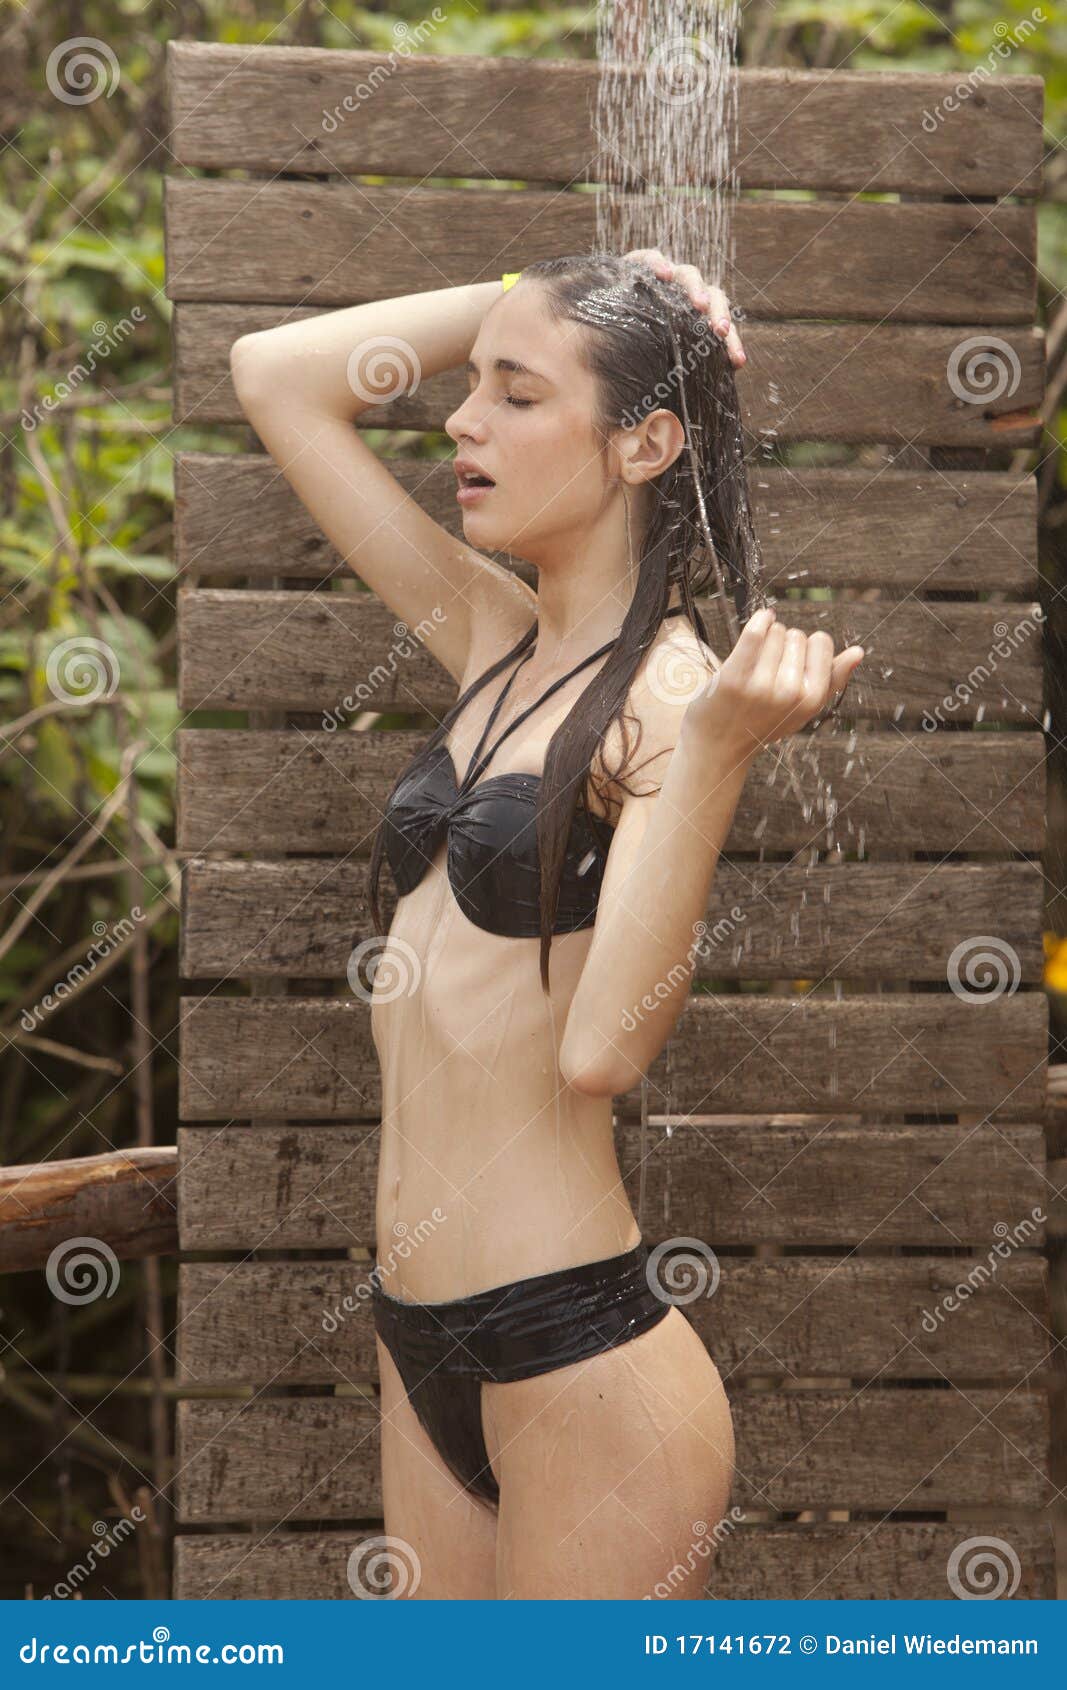 Best of Hot teen taking a shower